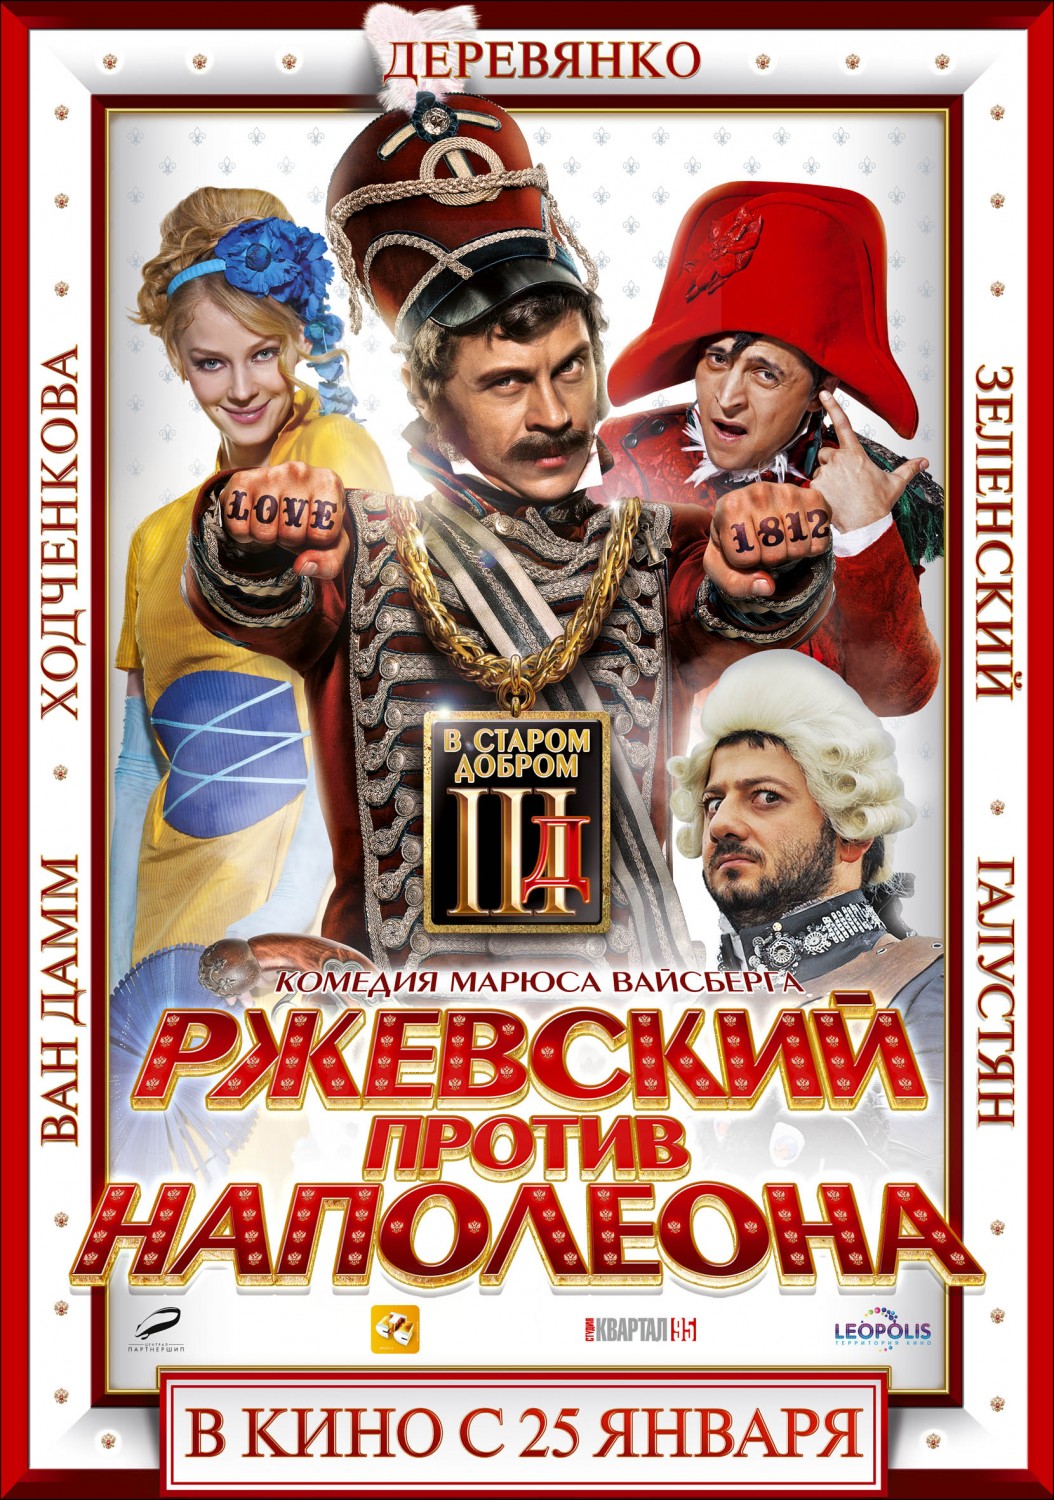 Extra Large Movie Poster Image for Rzhevskiy protiv Napoleona (#1 of 2)